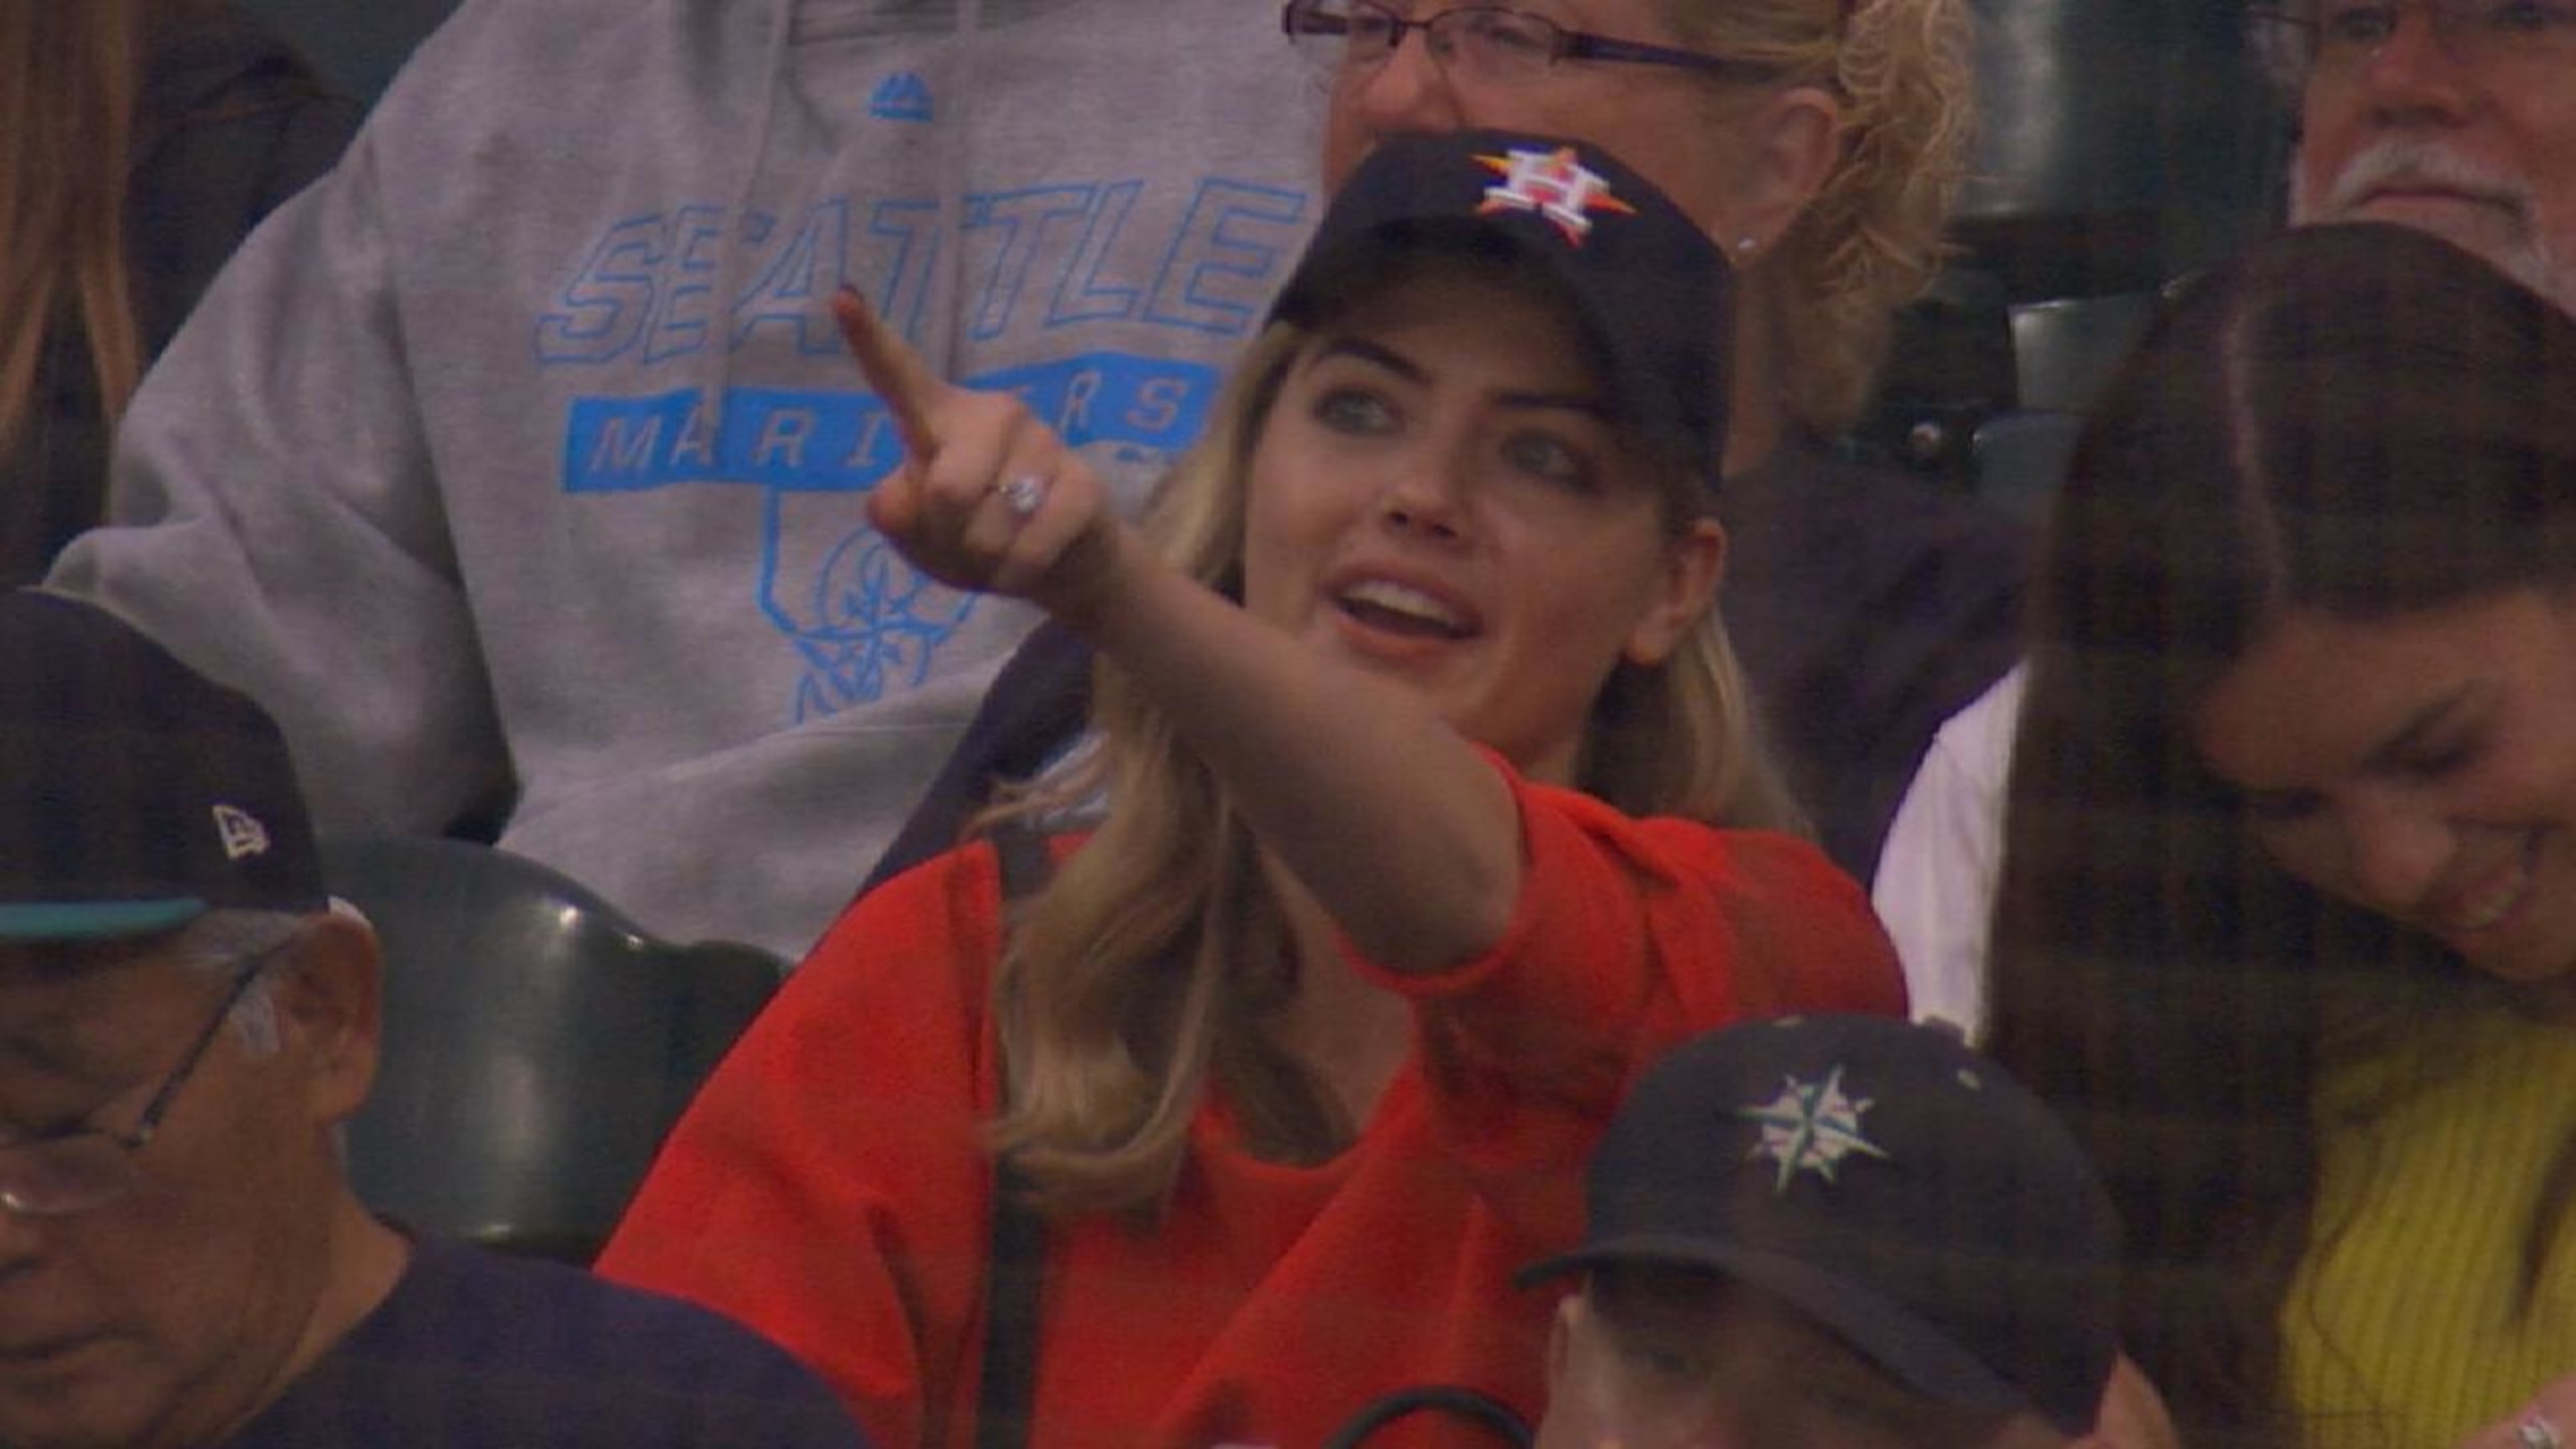 Kate Upton was in attendance for Justin Verlander's Astros debut